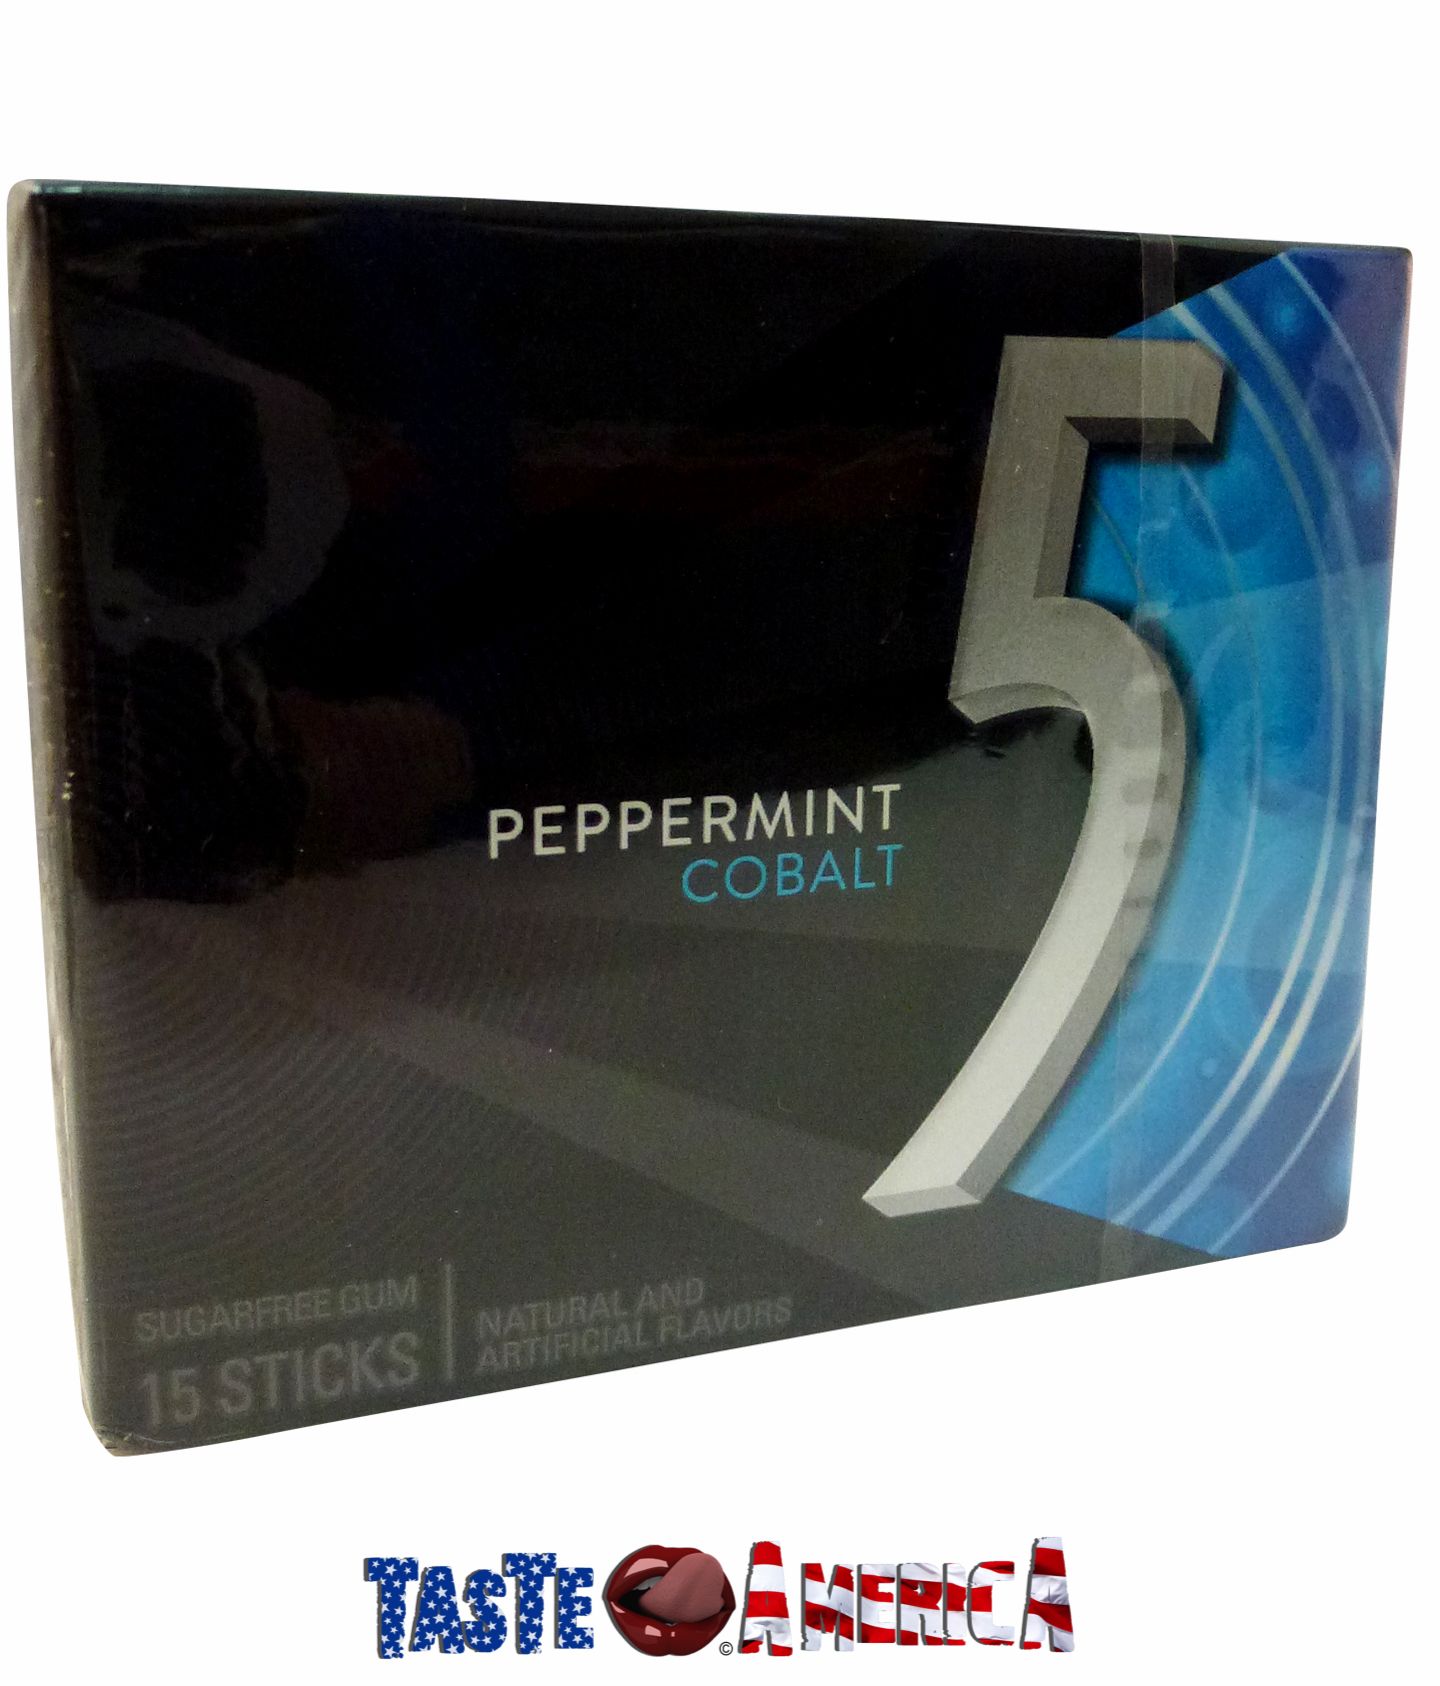 5 Gum Peppermint Cobalt Sugar-Free Chewing Gum, 10 pk./15 ct.